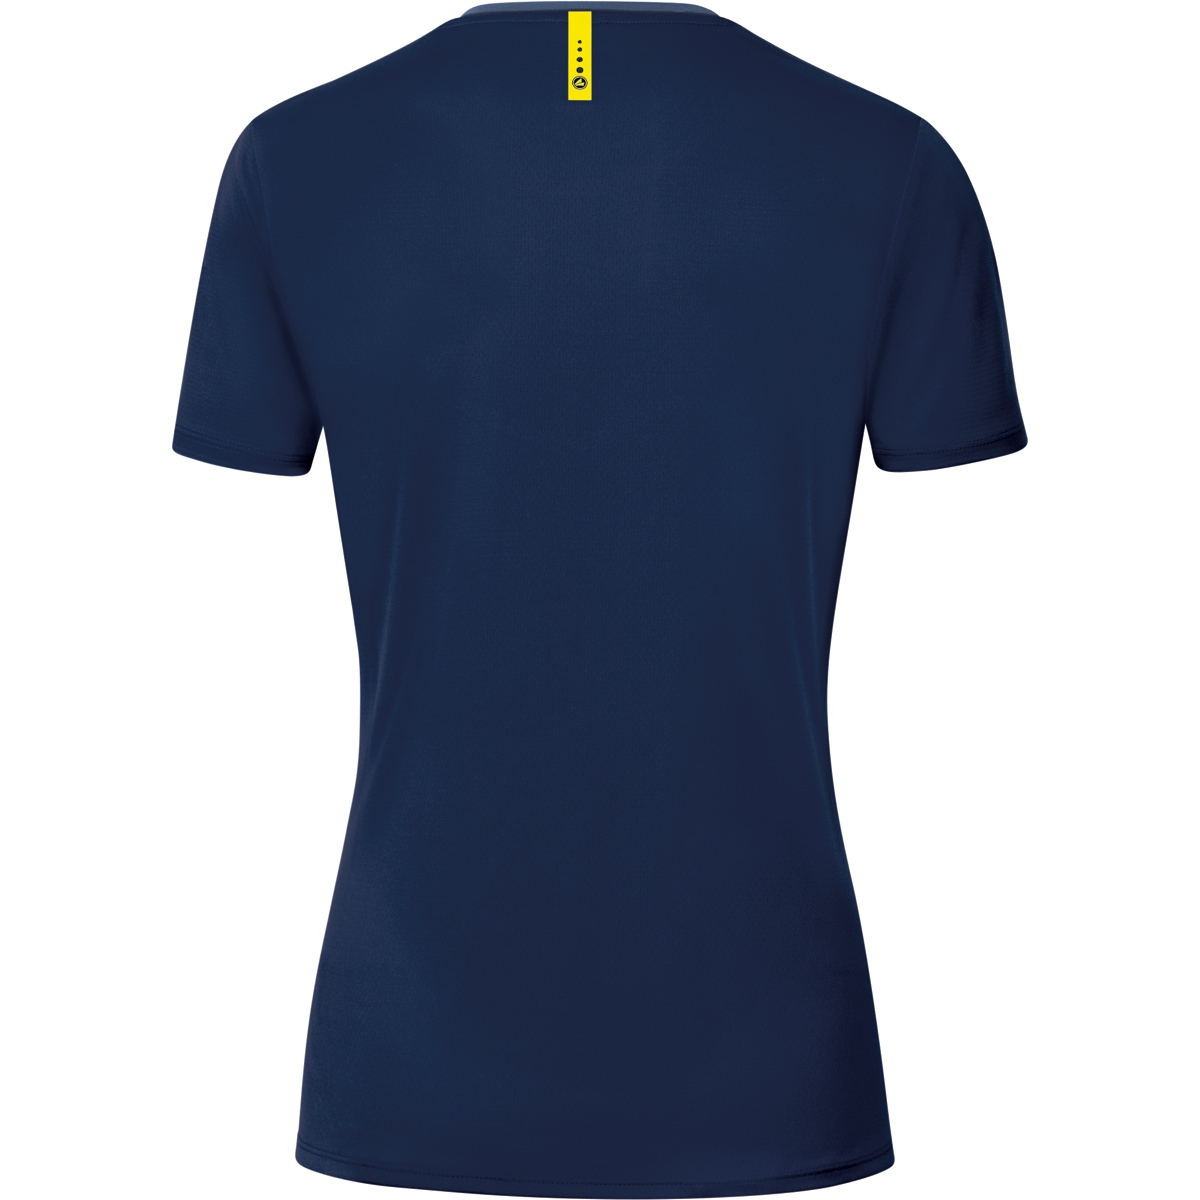 JAKO T-Shirt Champ 2.0 38, Damen, Gr. 6120 marine/darkblue/neongelb